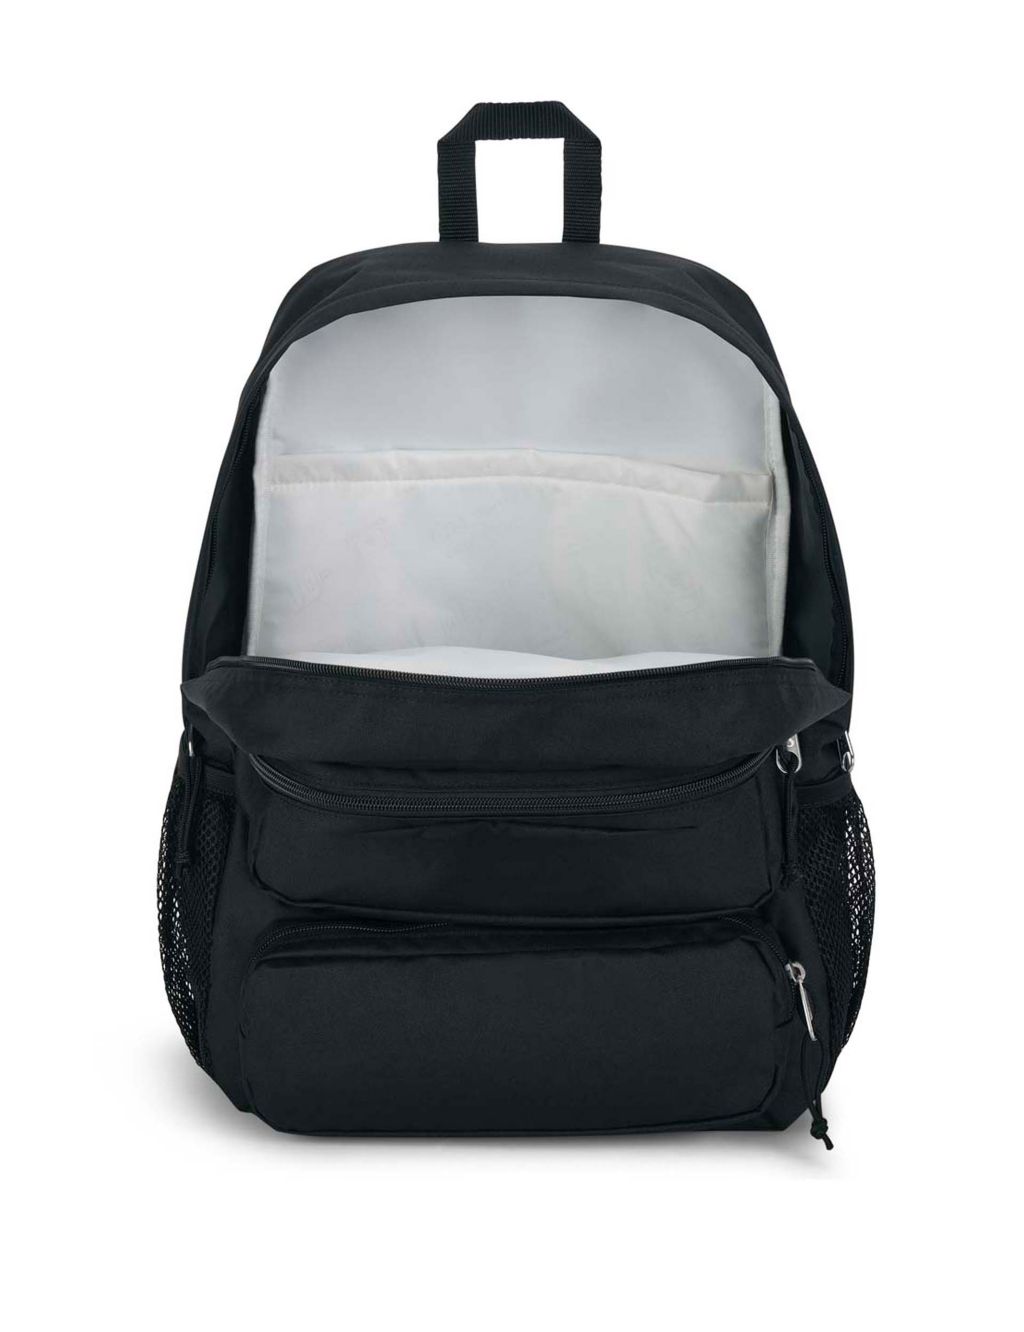 Doubleton Multi Pocket Backpack image 4